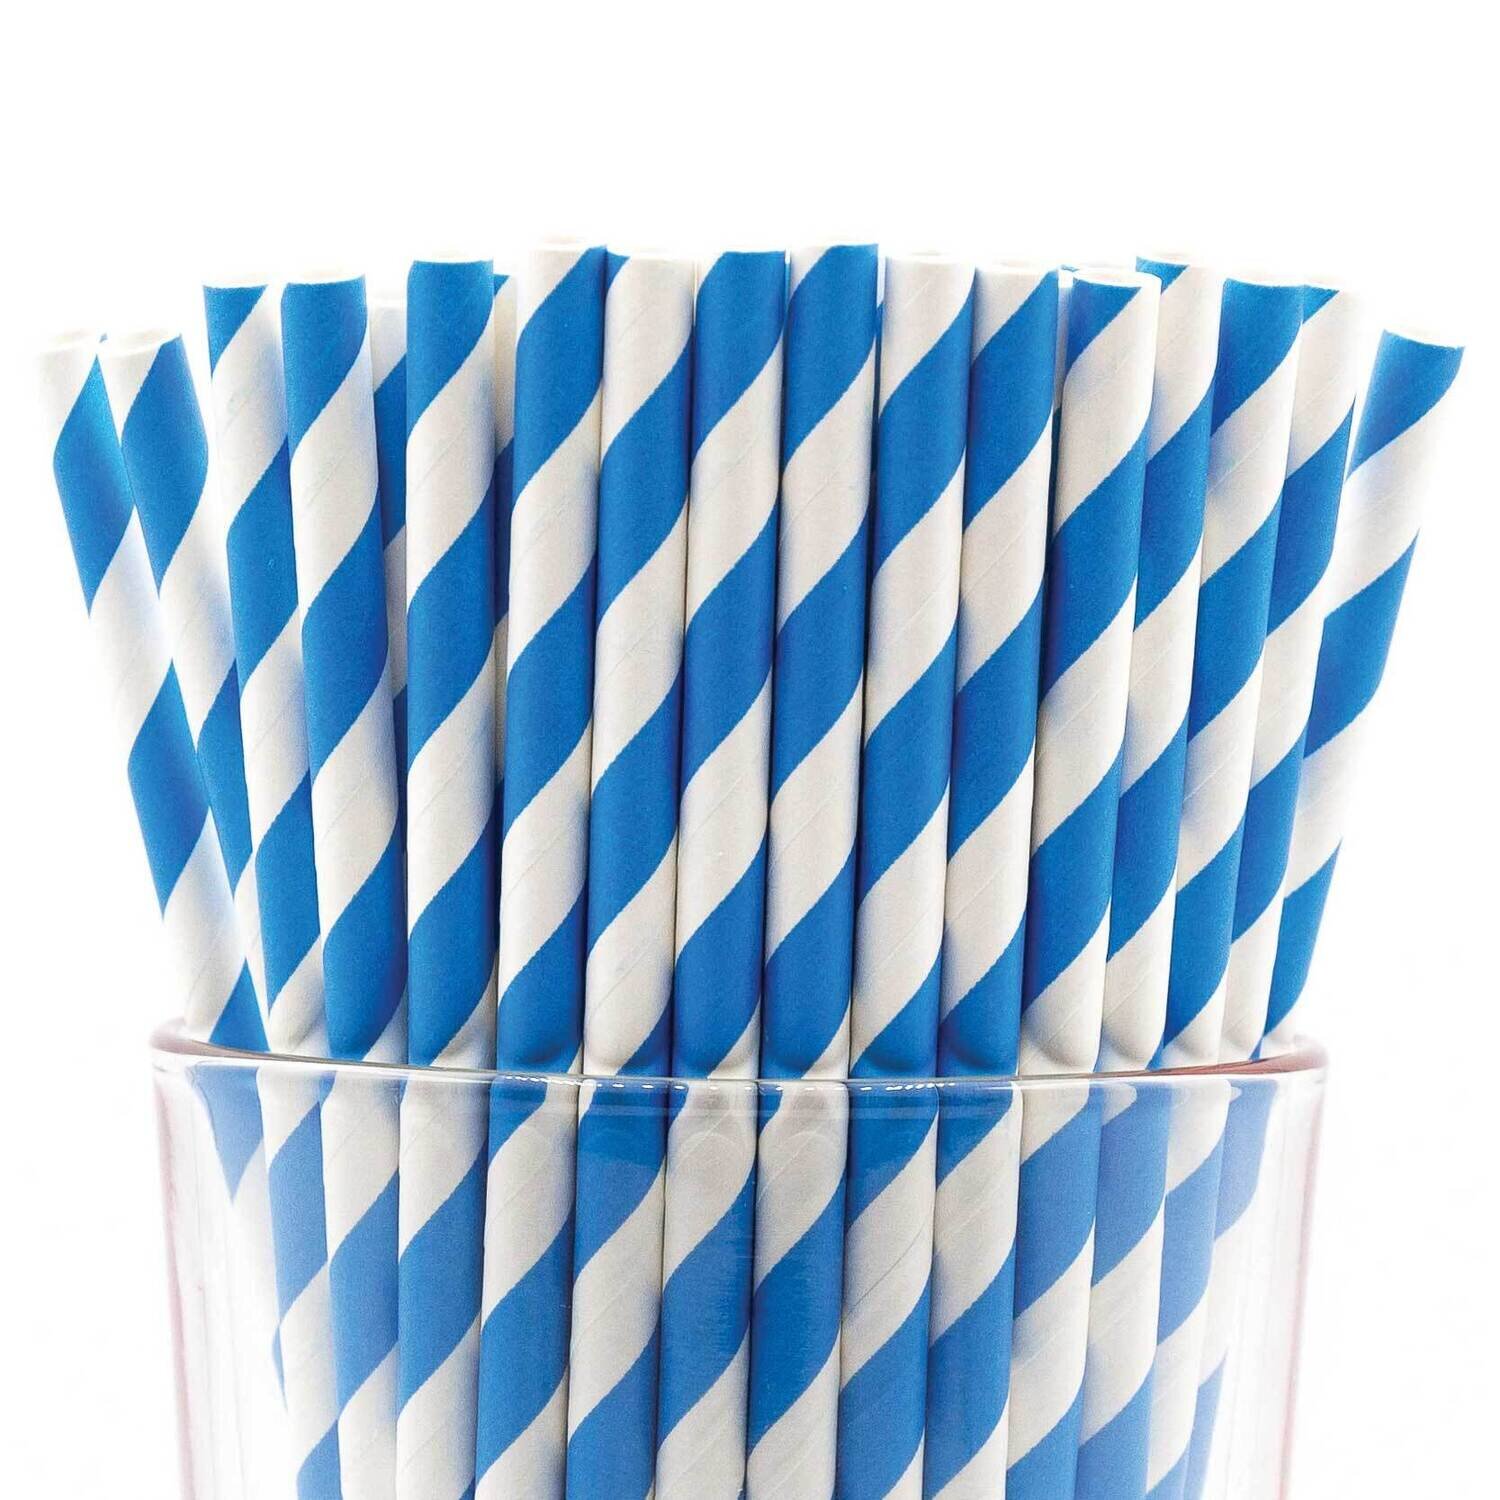 Pack of 150 Blue Wide Stripe Bio-degradable Paper Straws GM22625